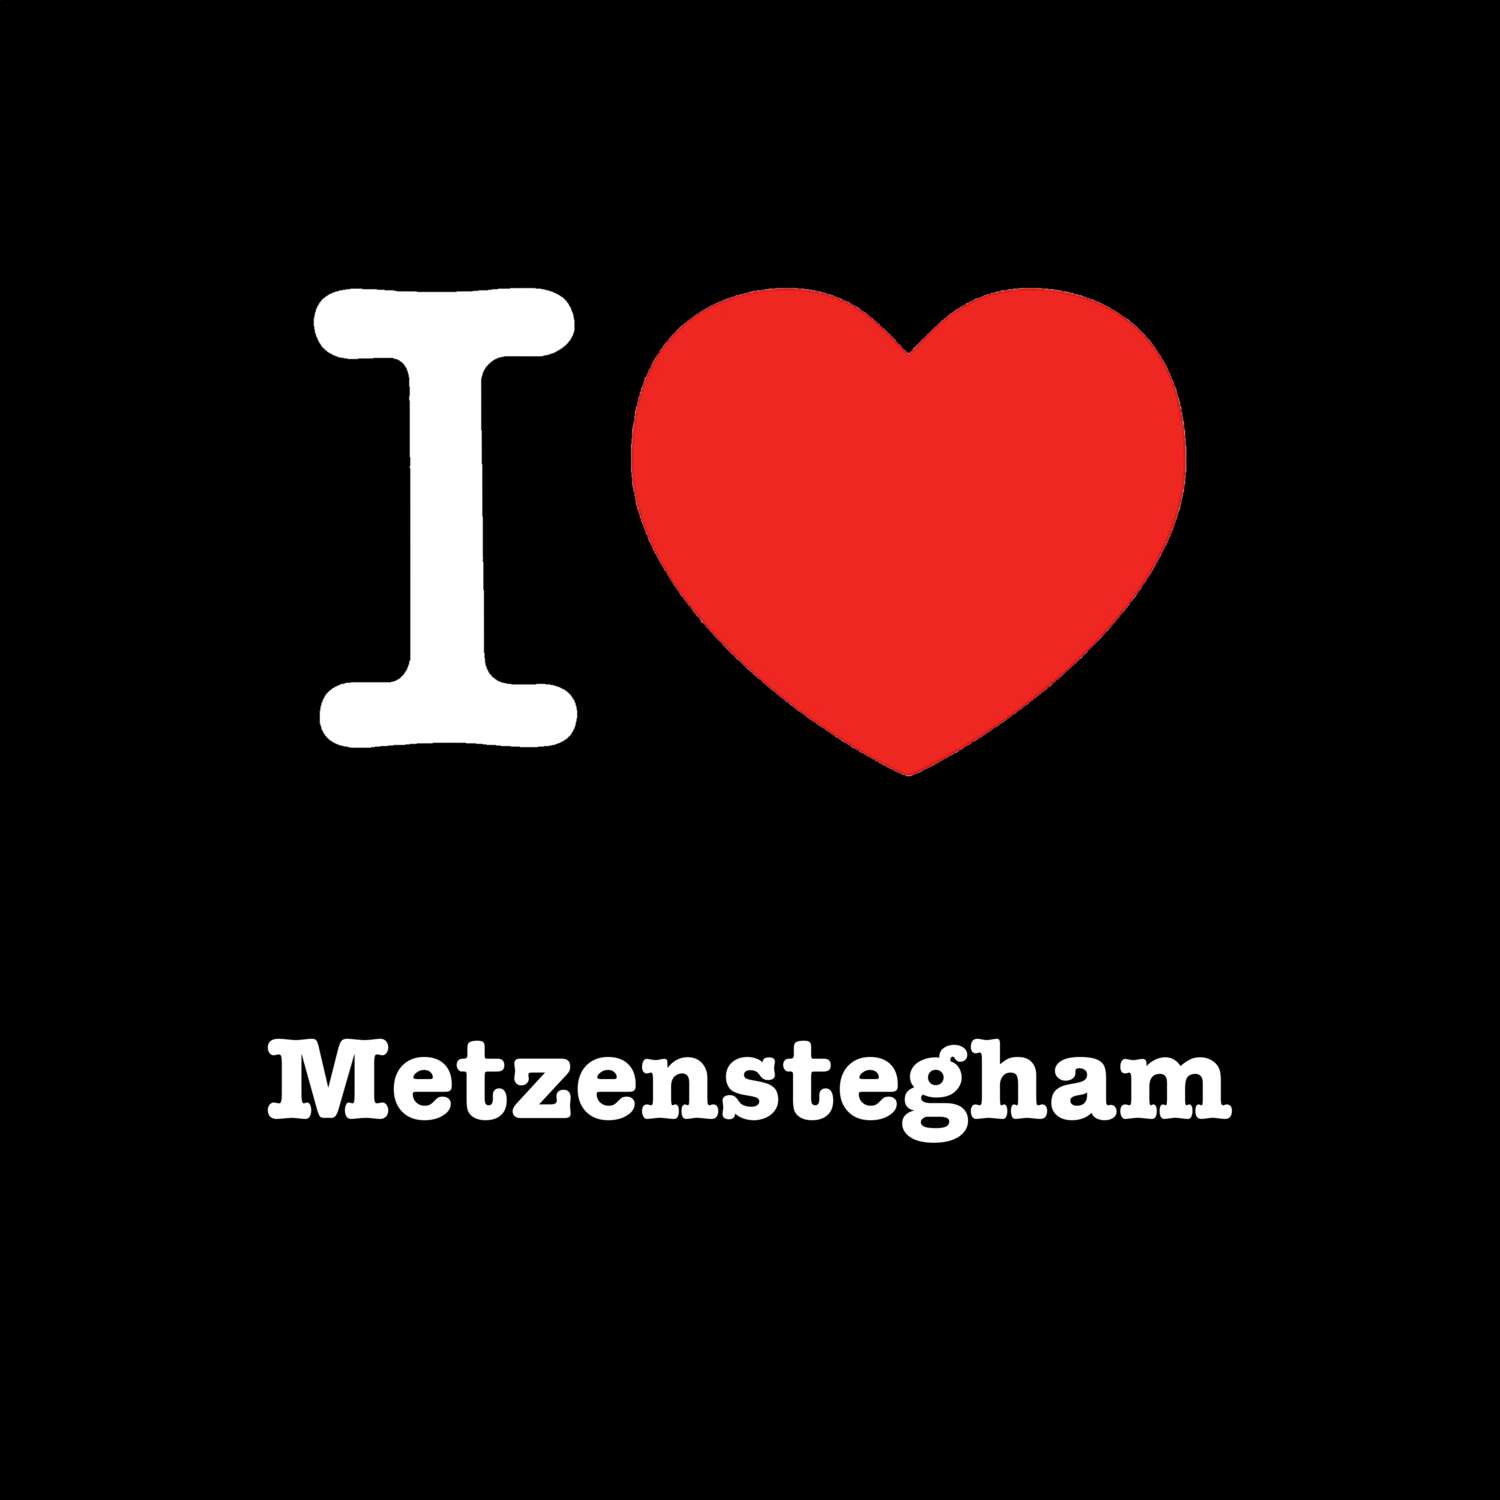 Metzenstegham T-Shirt »I love«